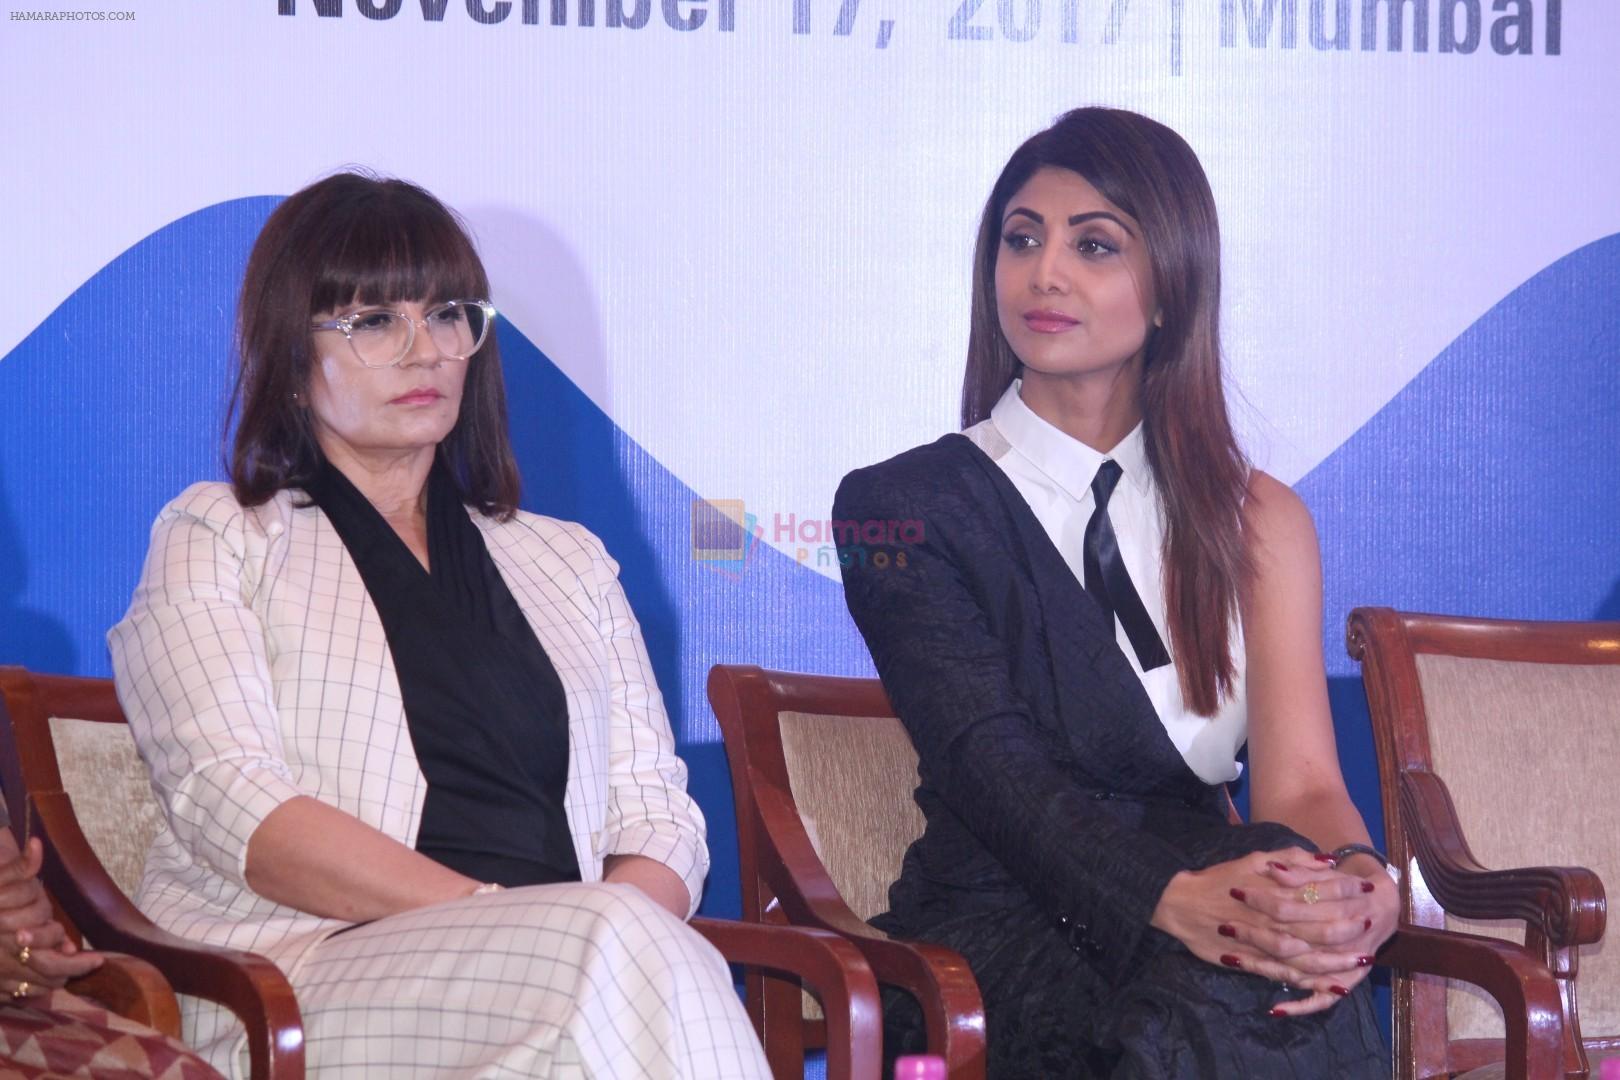 Shilpa Shetty, Neeta Lulla at Ficci Host Global Entrepreneurship Summit-17 on 17th Nov 2017